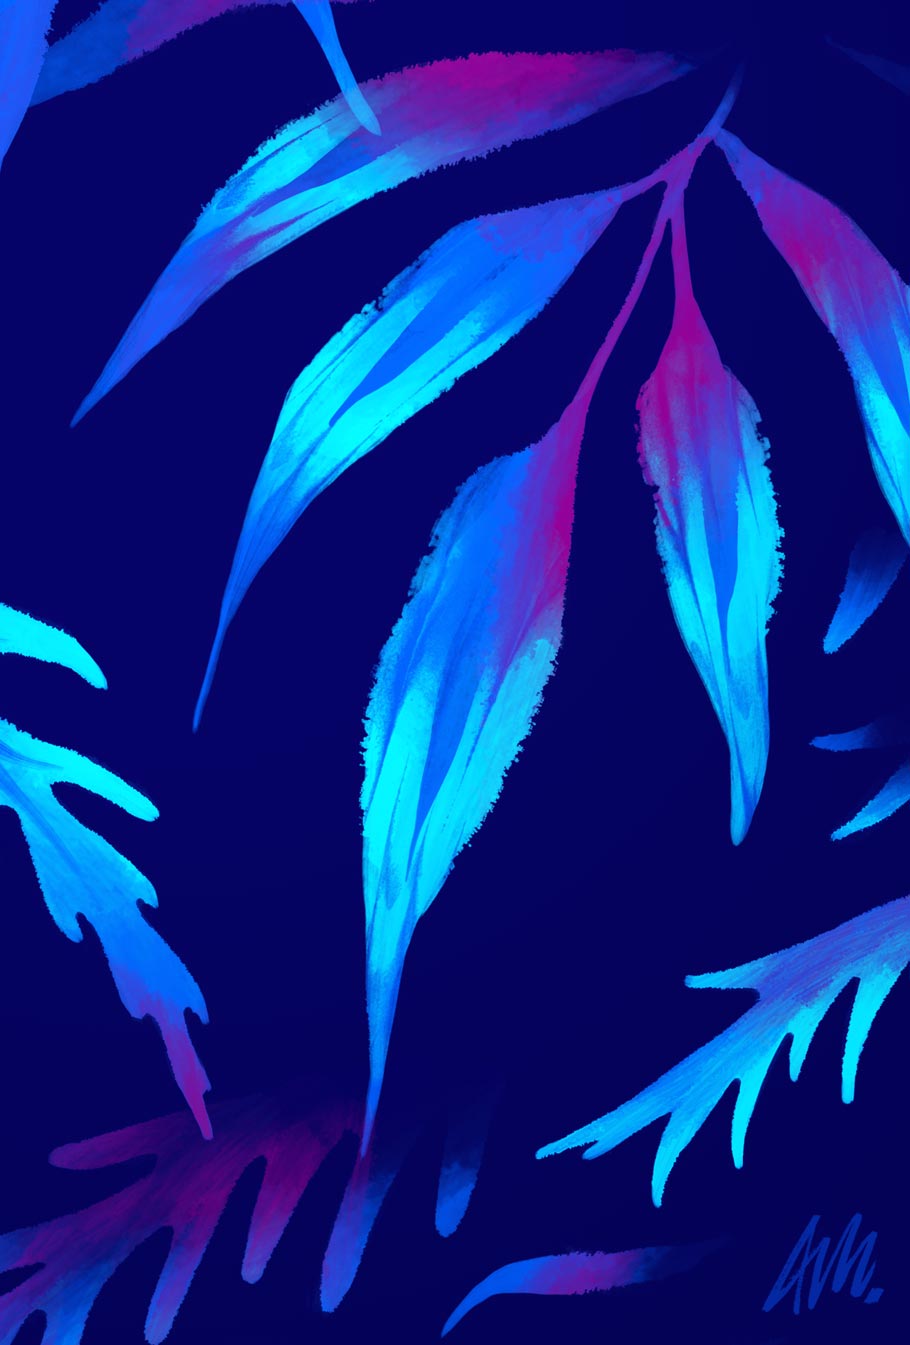 Fern leaf print pattern blue by Andrea Muller